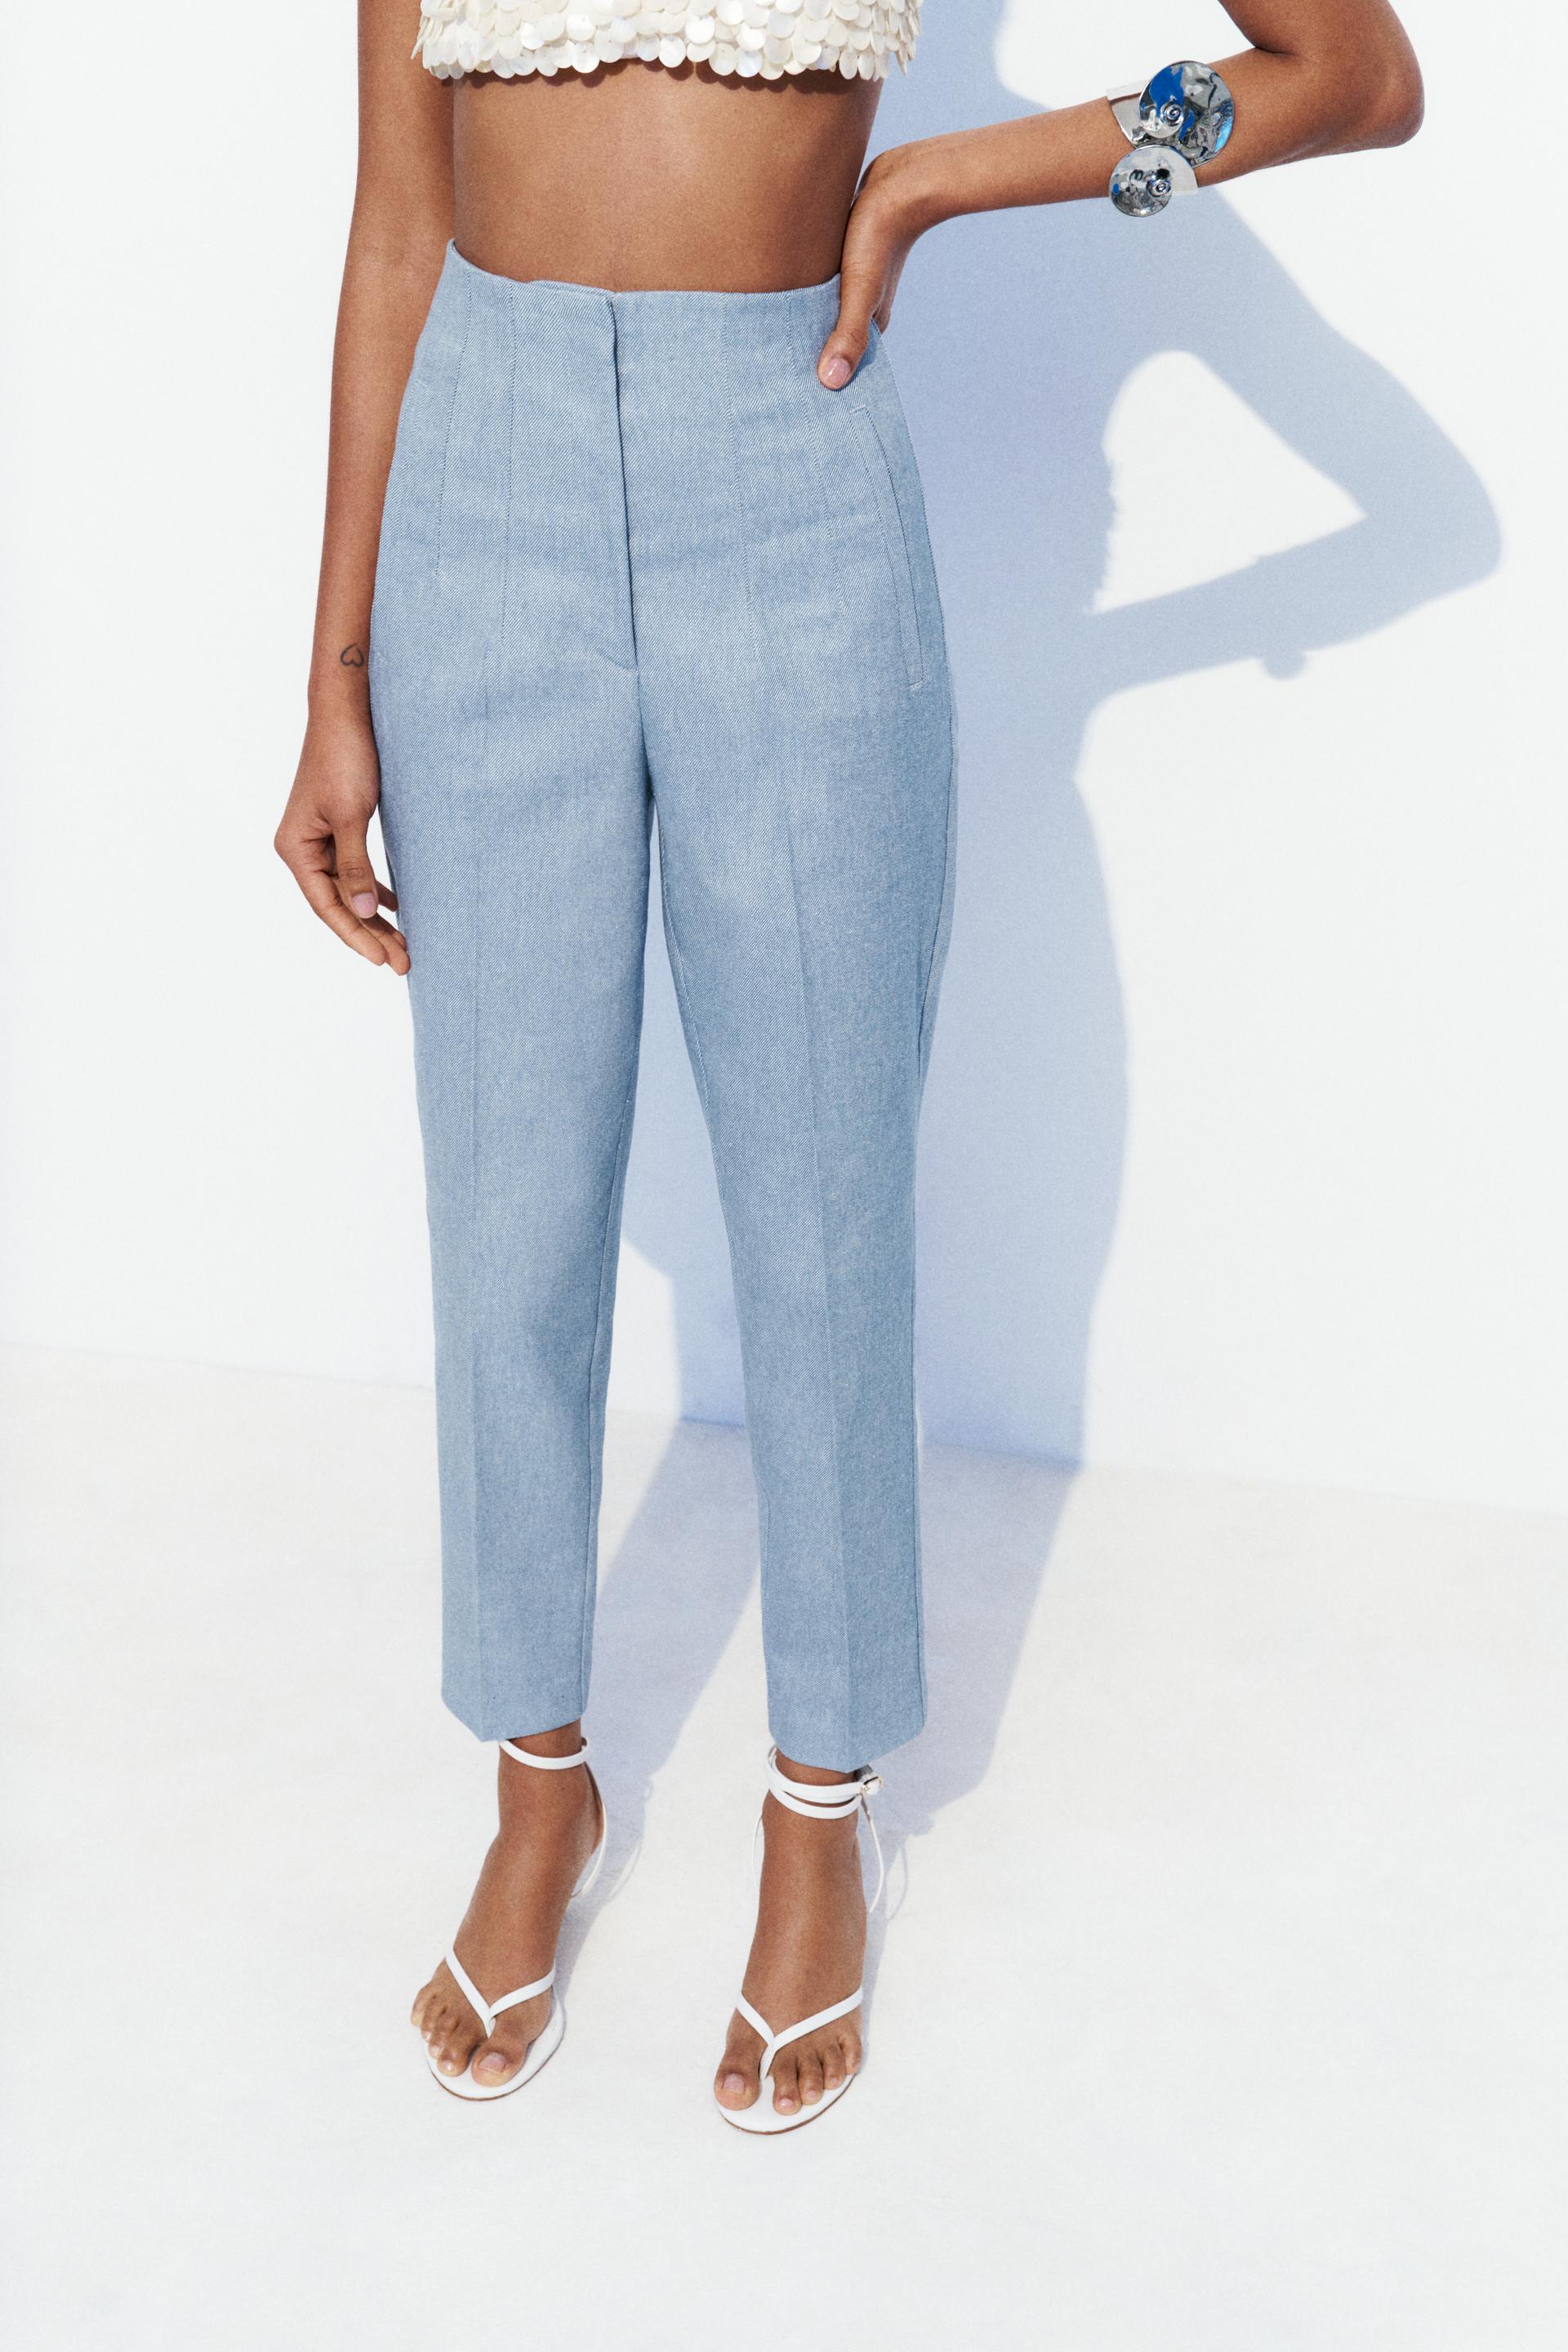 Zara High-Waisted Full Length Pants Size XS-S